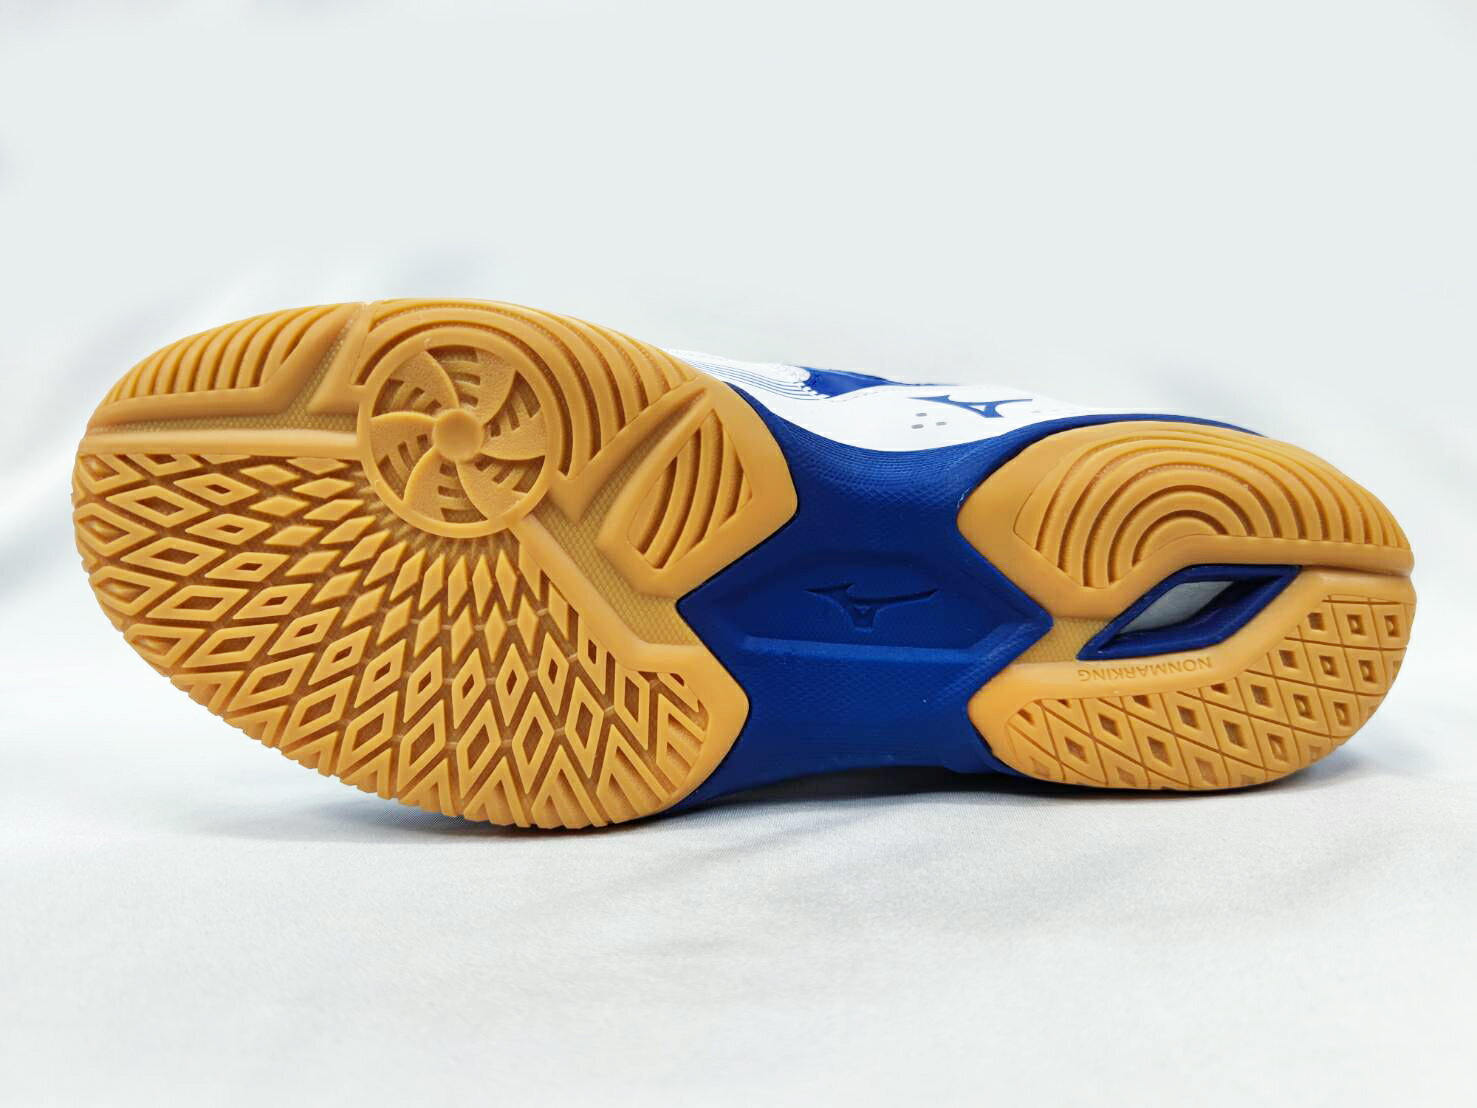 MIZUNO 美津濃桌球鞋寬楦WAVE KAISERBURG 7 可當羽球鞋排球鞋 